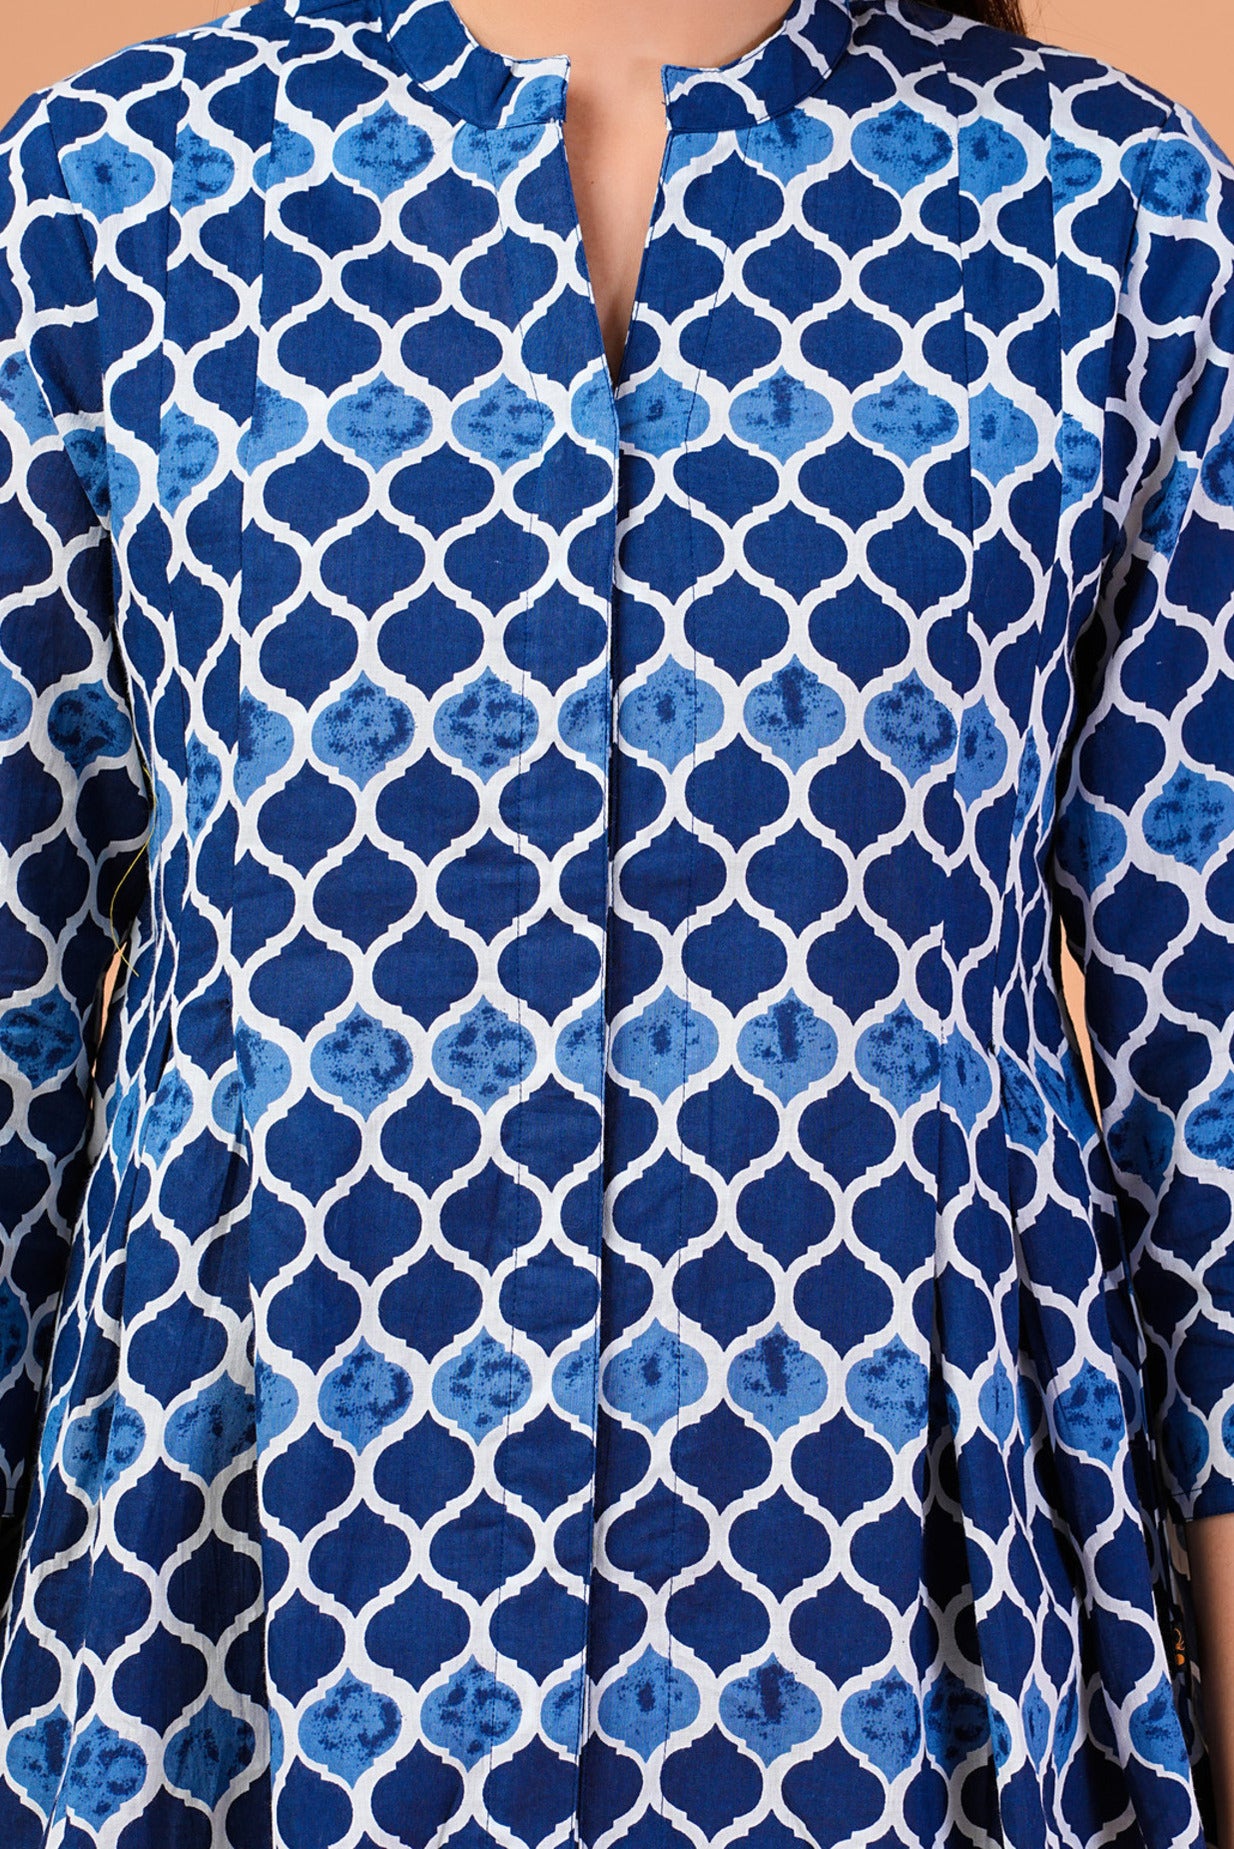 Blue Geometric Printed Cotton Top